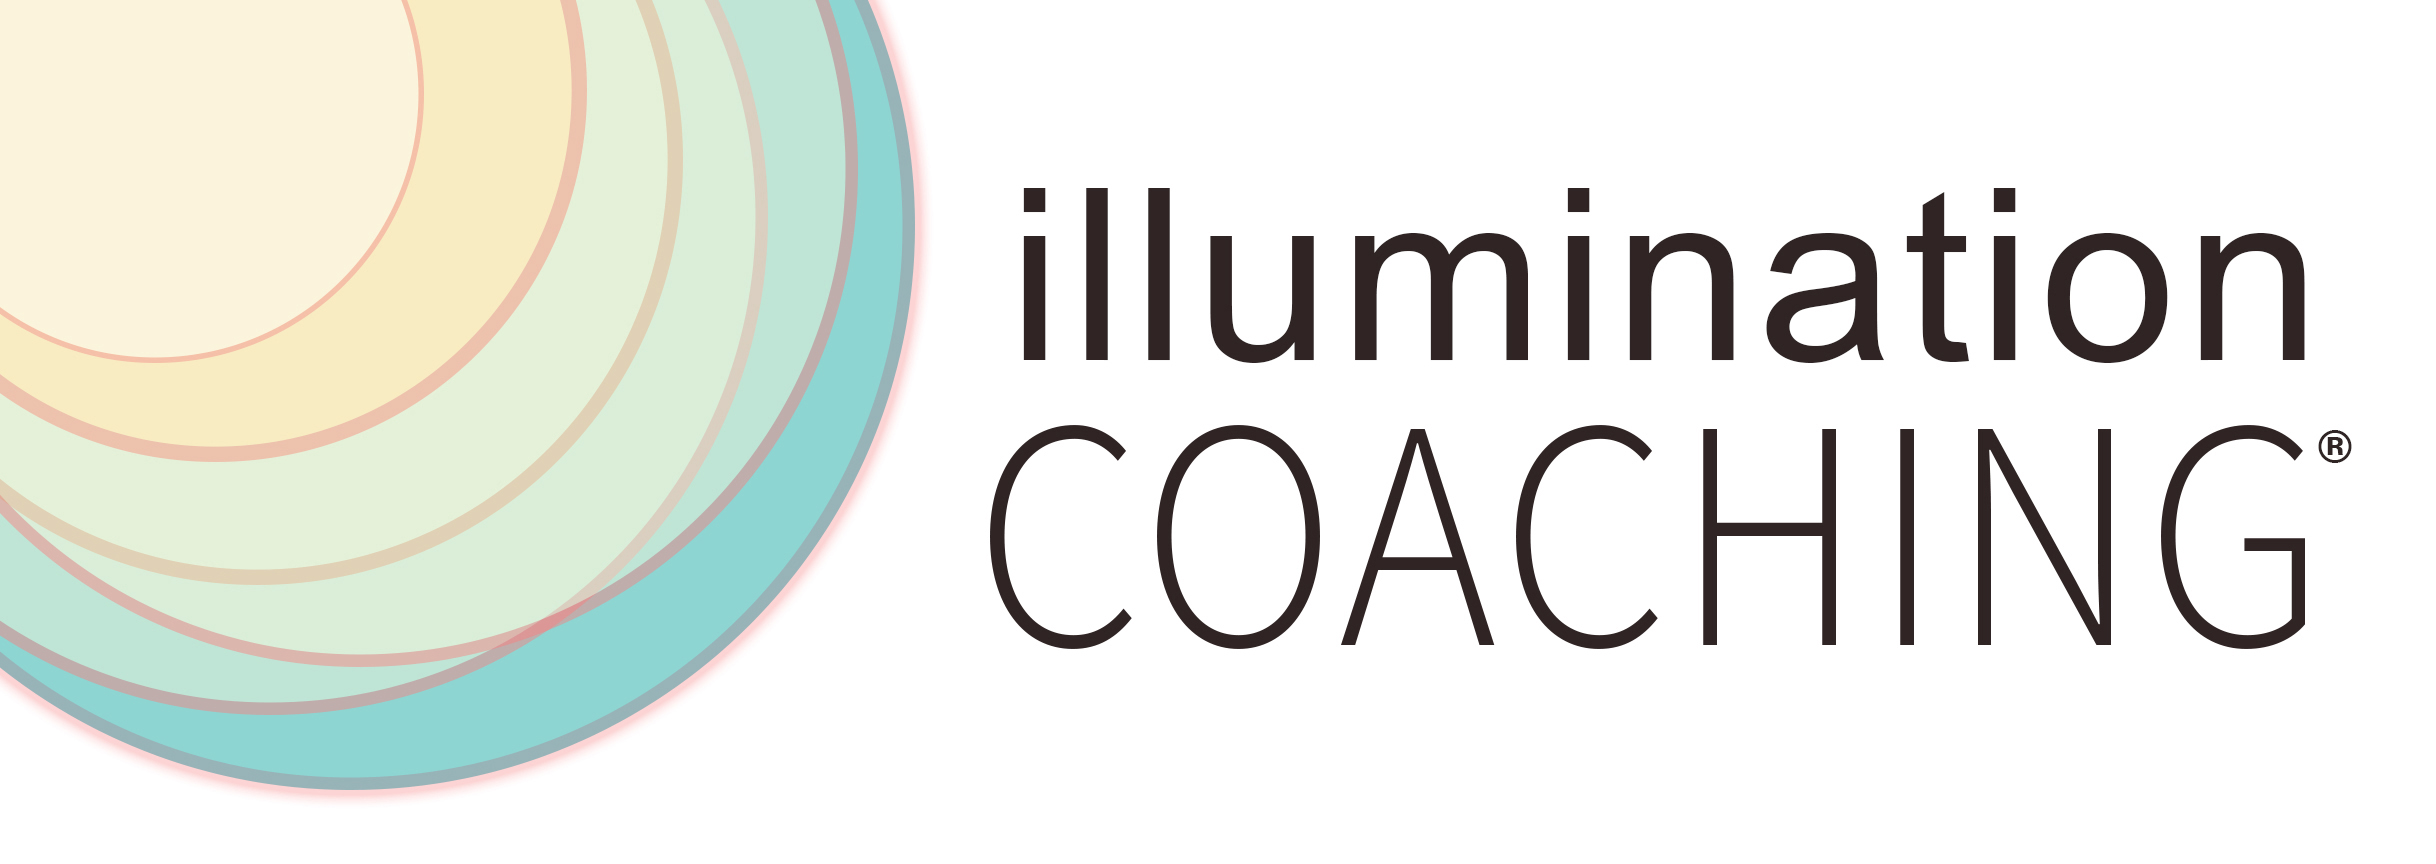 Illumination Coaching